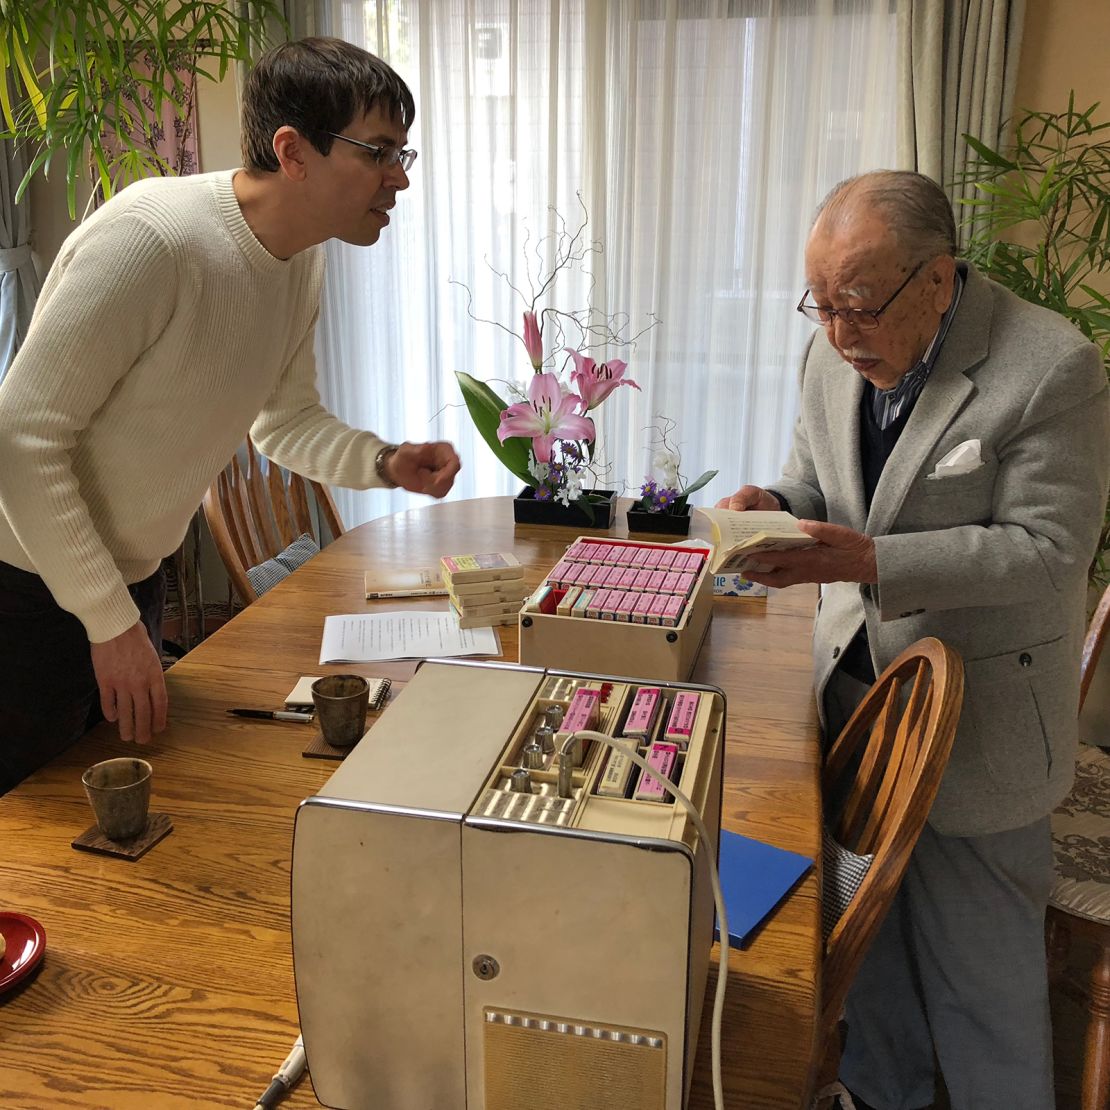 Shigeichi Negishi, then 95, shows author Matt Alt his invention in 2018.